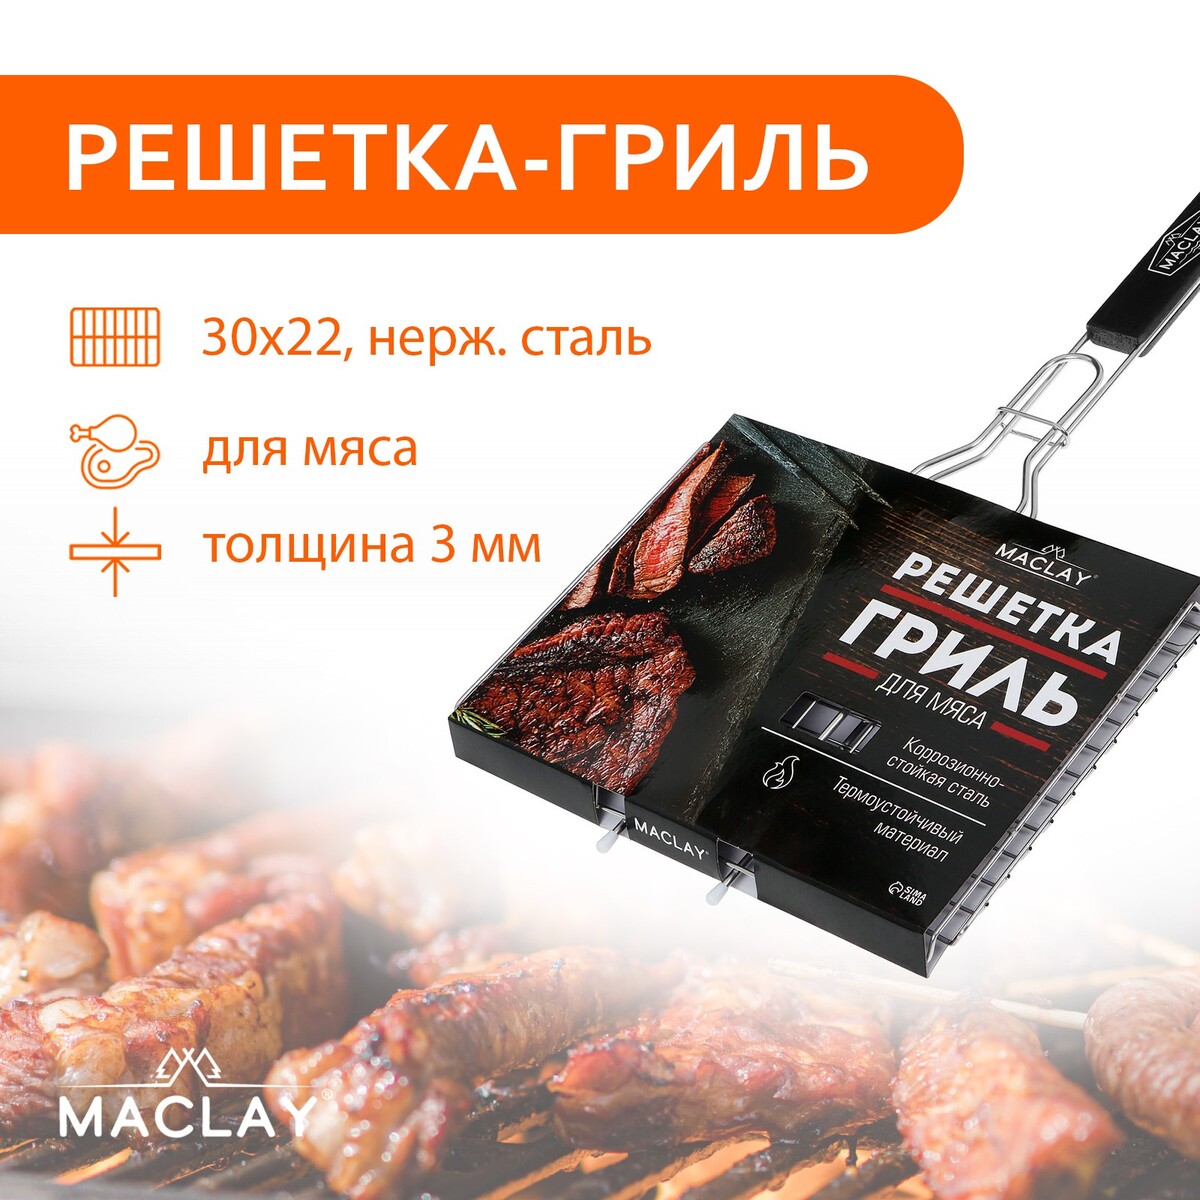 Решетка гриль maclay premium, 50х30х22 см, для мяса, нержавеющая сталь решетка гриль для сосисок maclay антипригарная 50x26x17 см